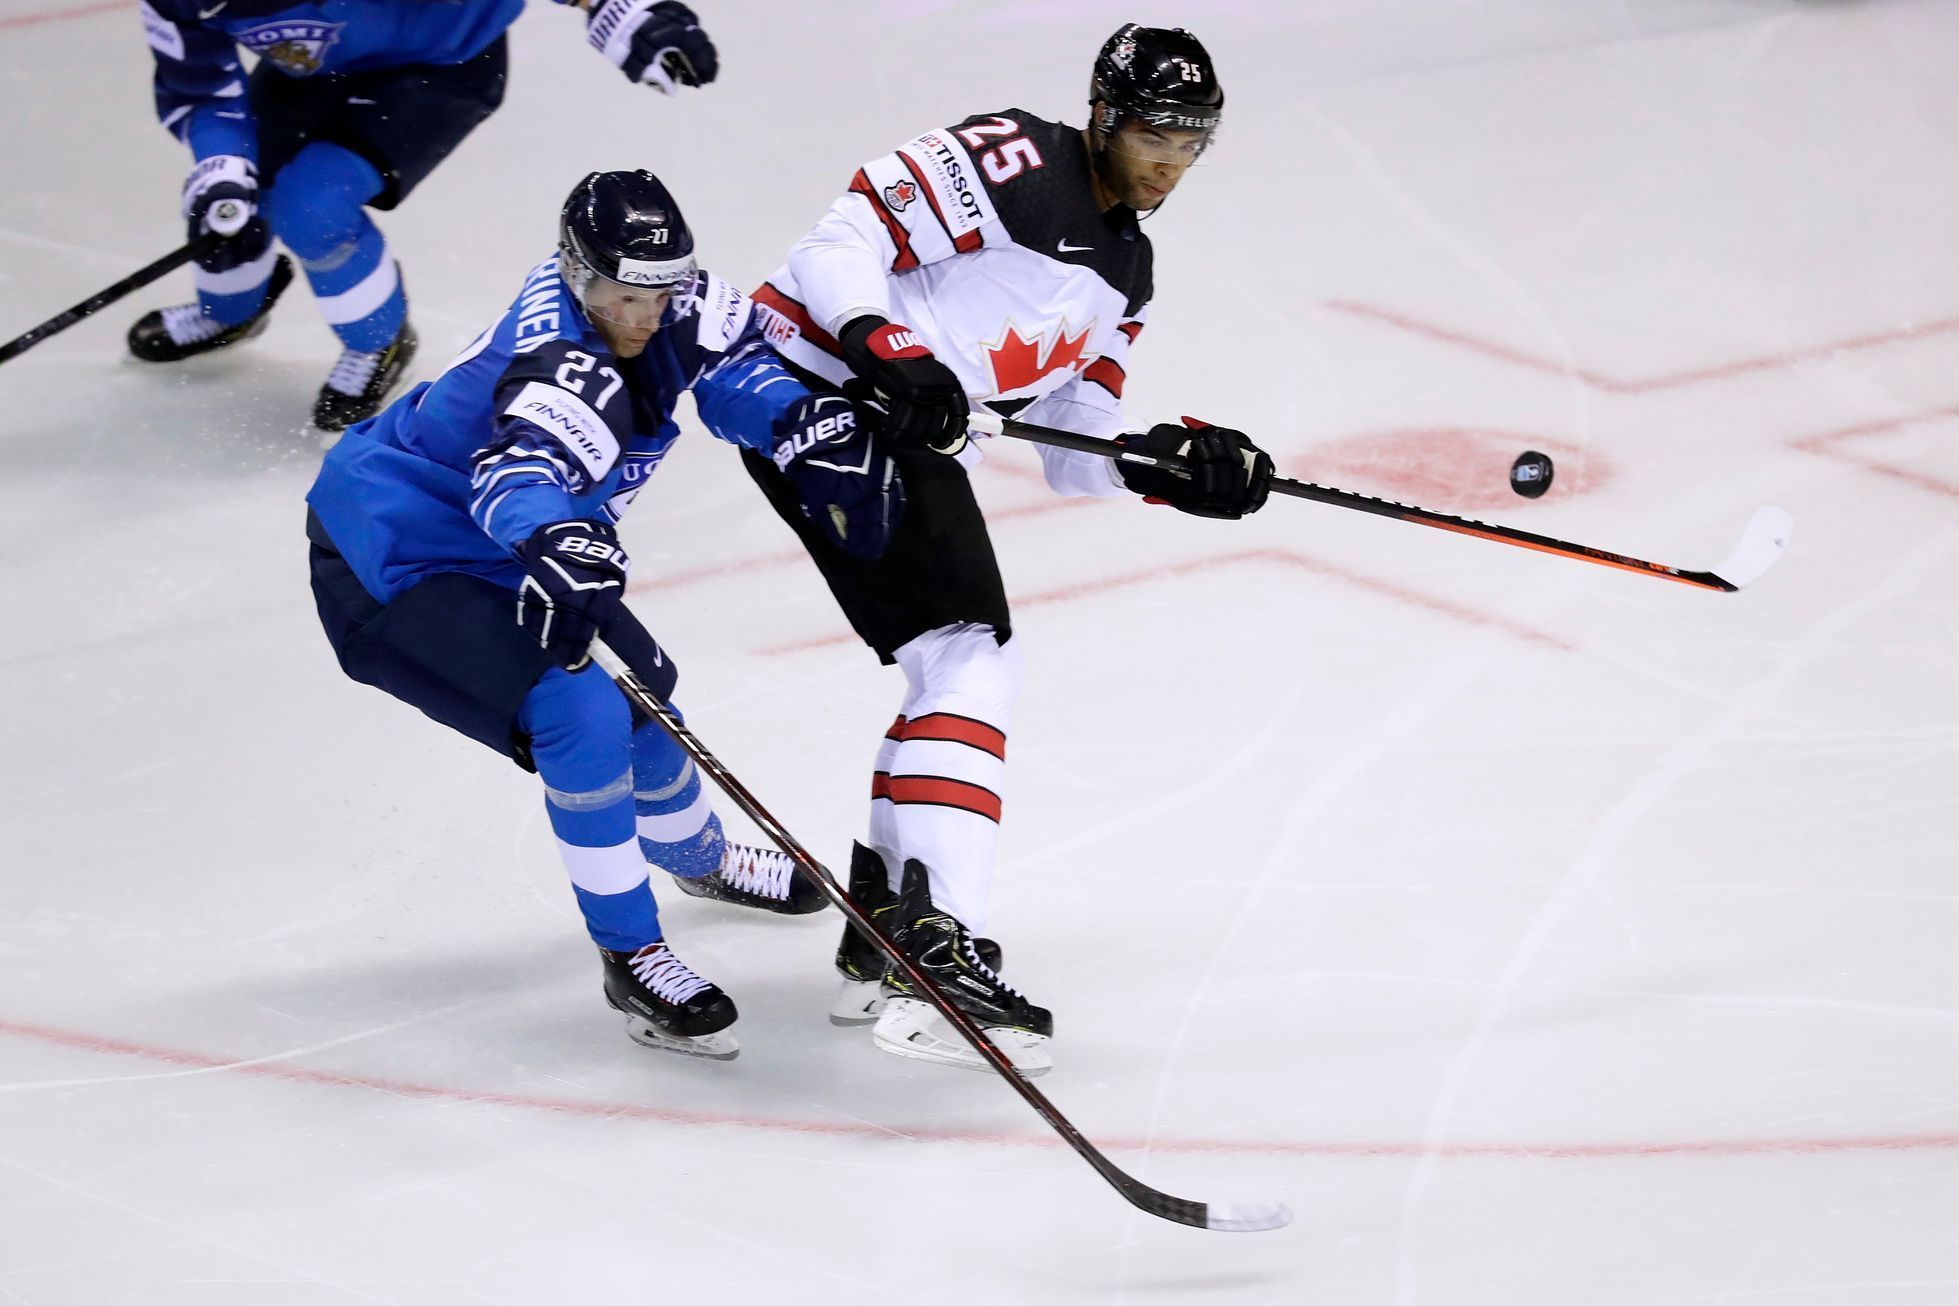 Finsko vs. Kanada na MS 2019: Eetu Luostarinen a Darnell Nurse